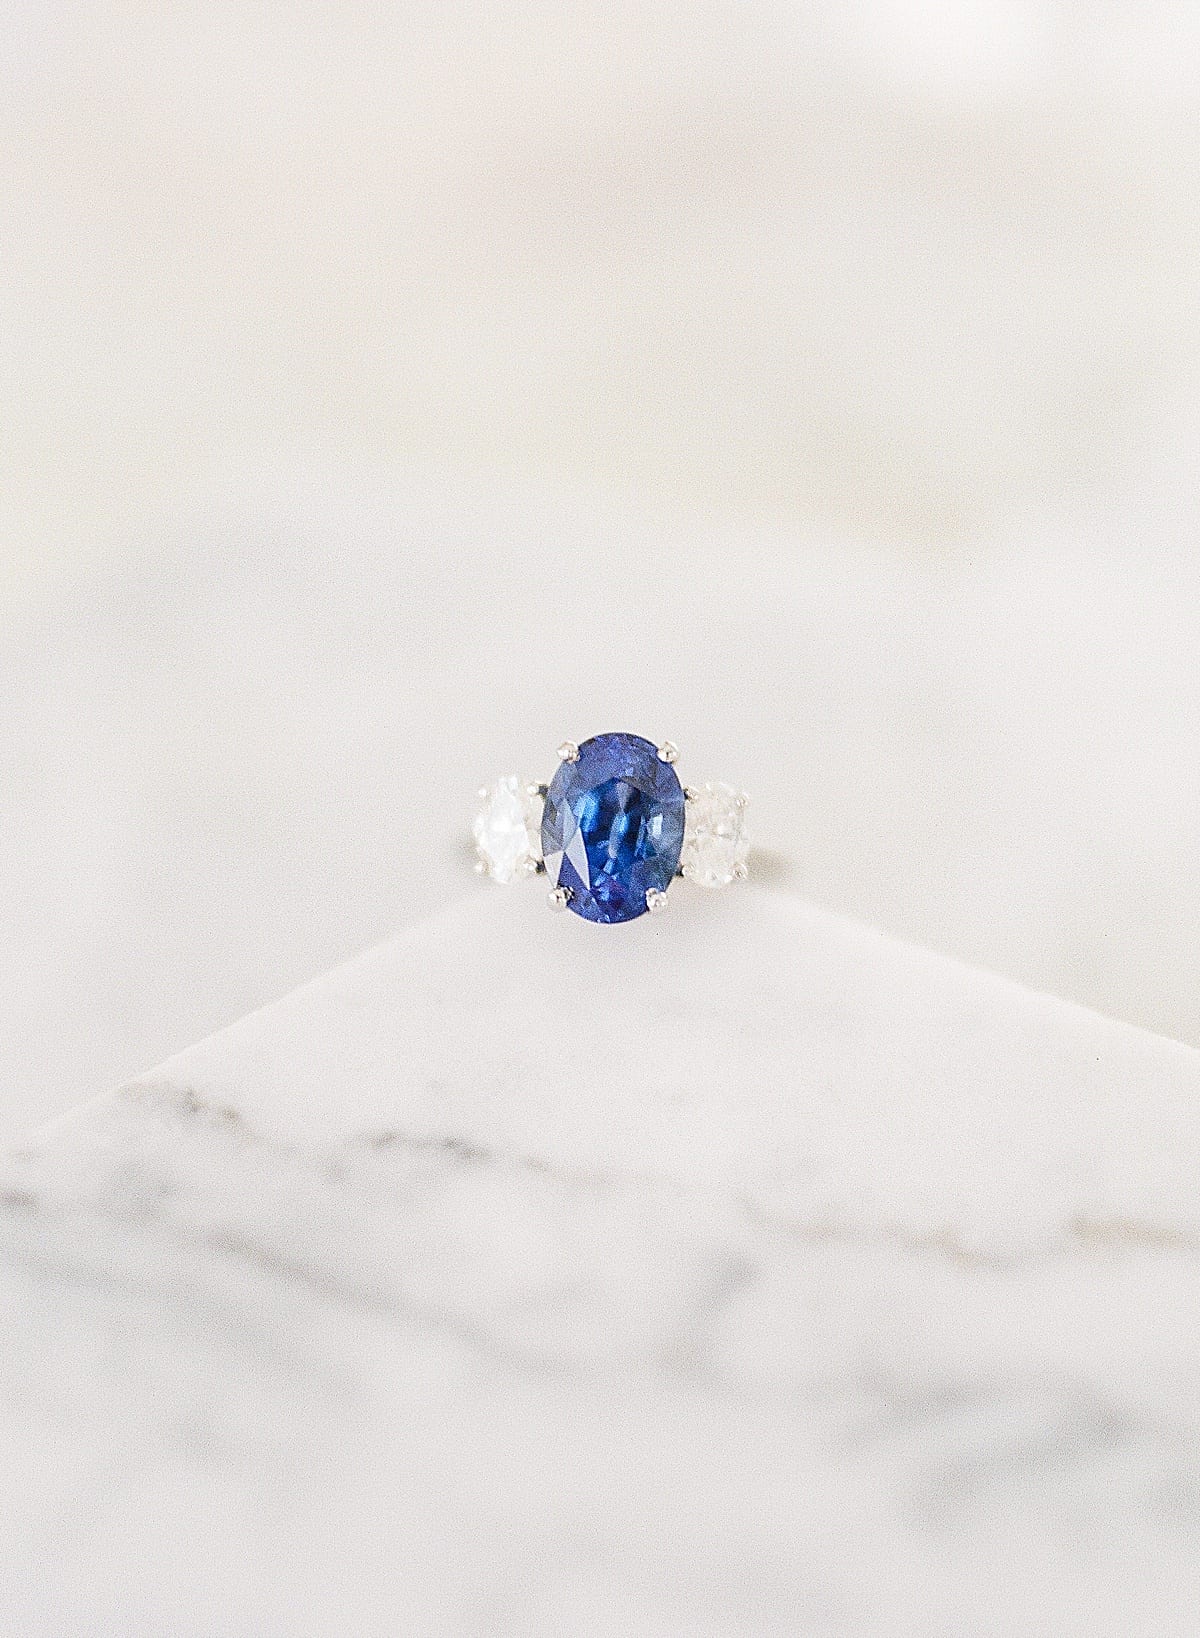 blue Sapphire untreated 4.58 carat stone Photo